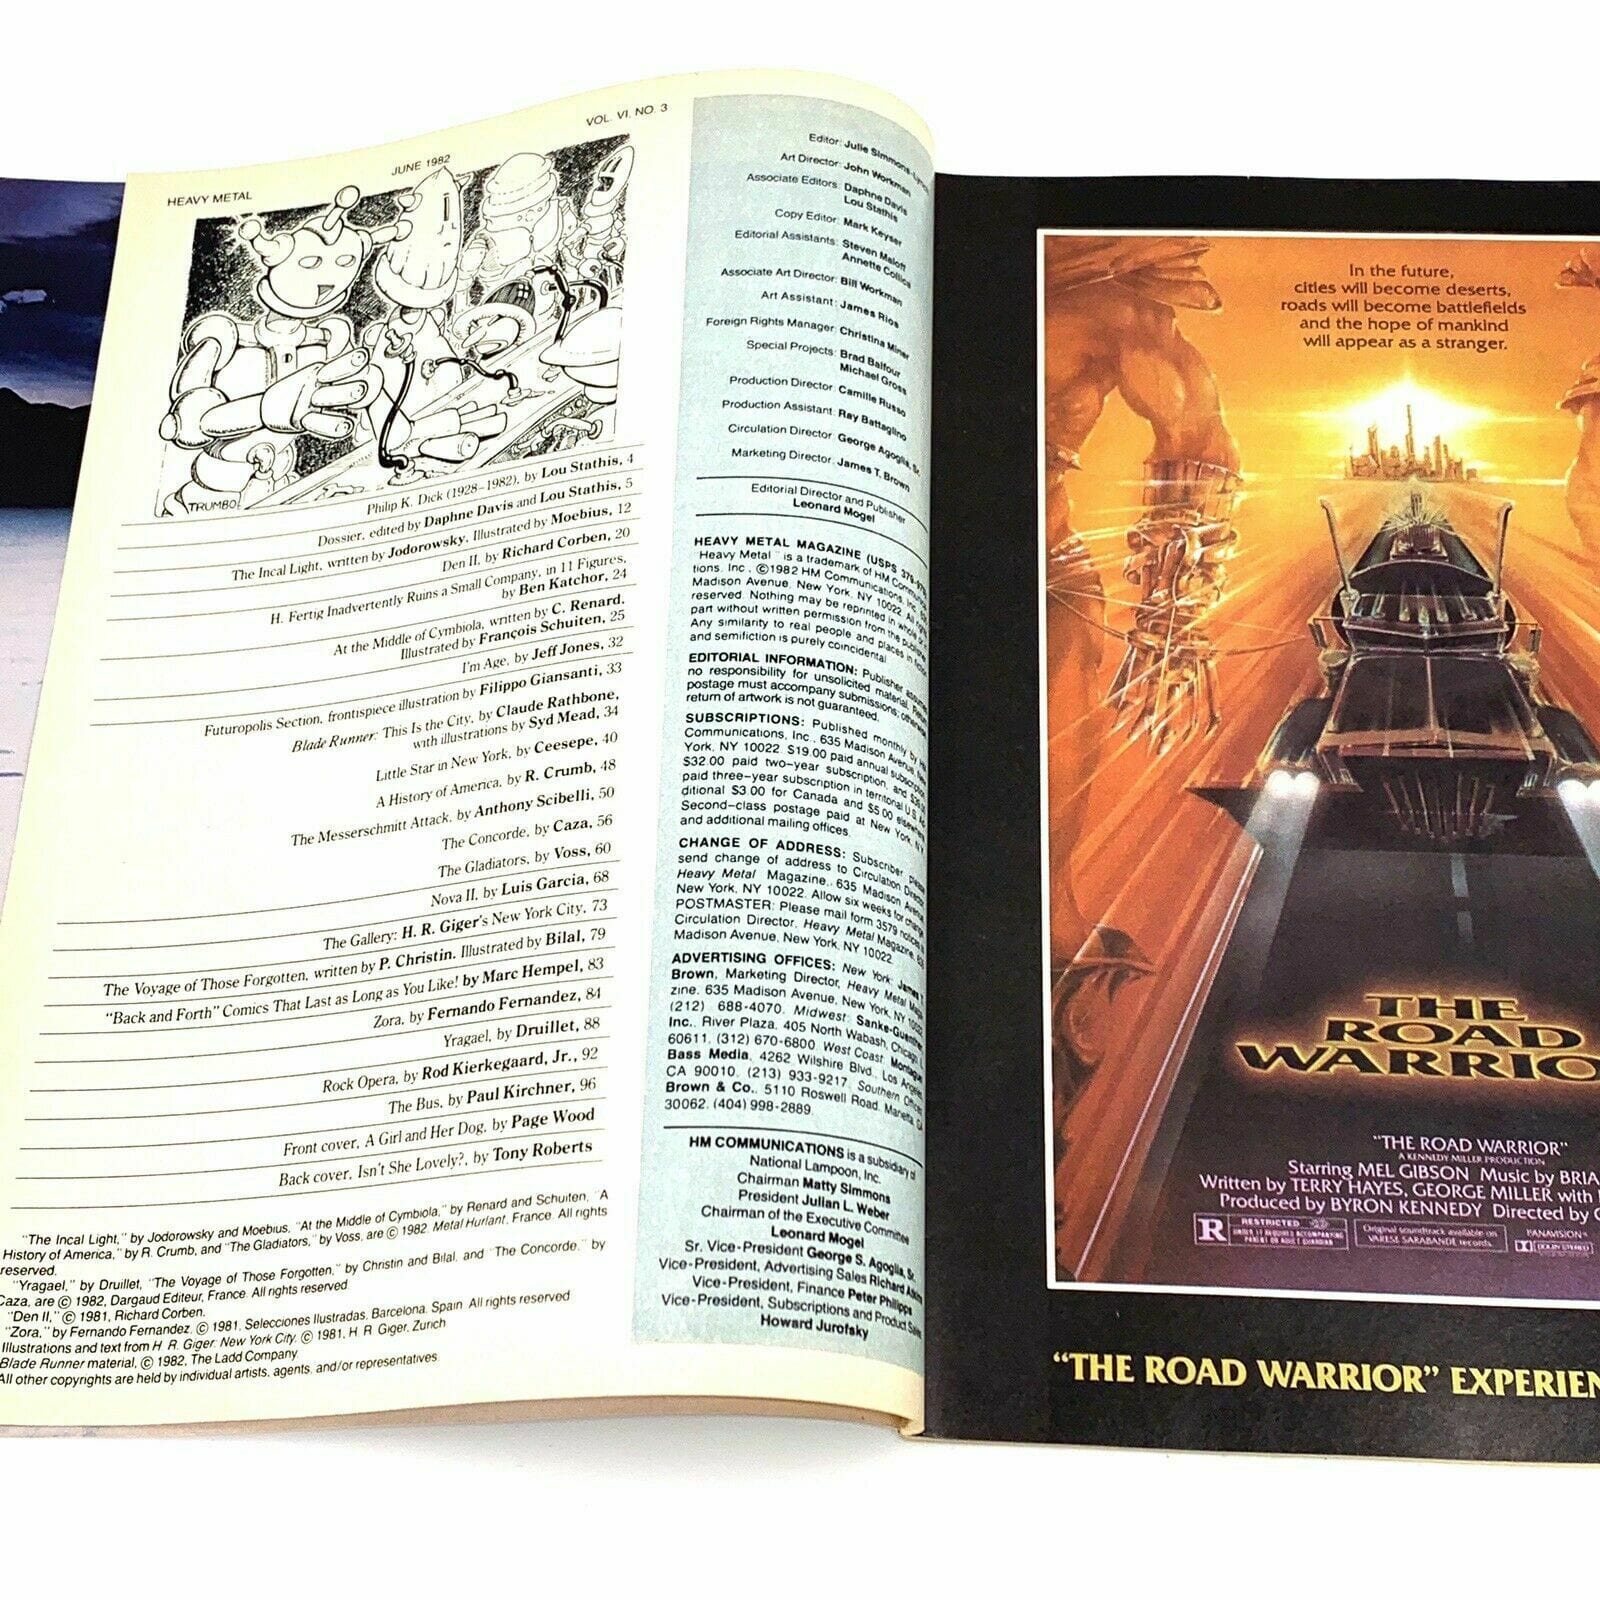 HEAVY METAL - Adult Illustrative Fantasy Magazine - June 1982 - parsimonyshoppes